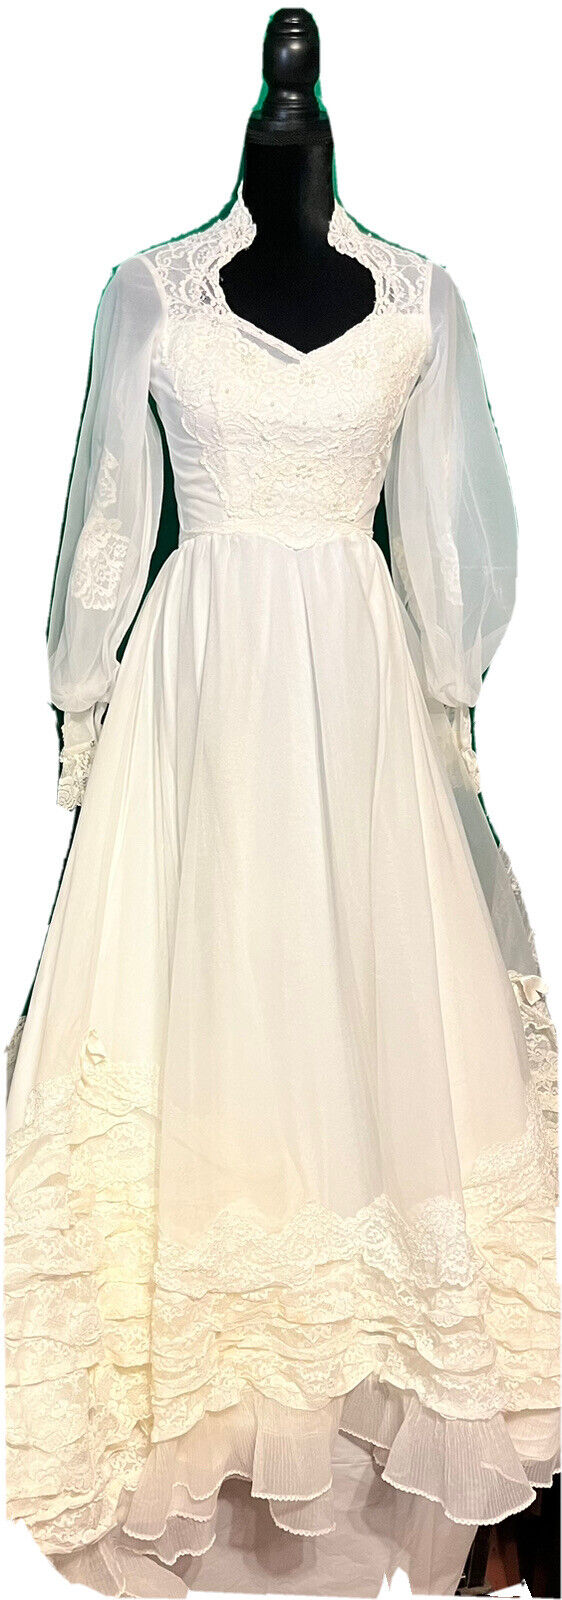 Vintage 1970s Bishop Sleeve Sweetheart Neckline Wedding Dress By Alfred Angelo